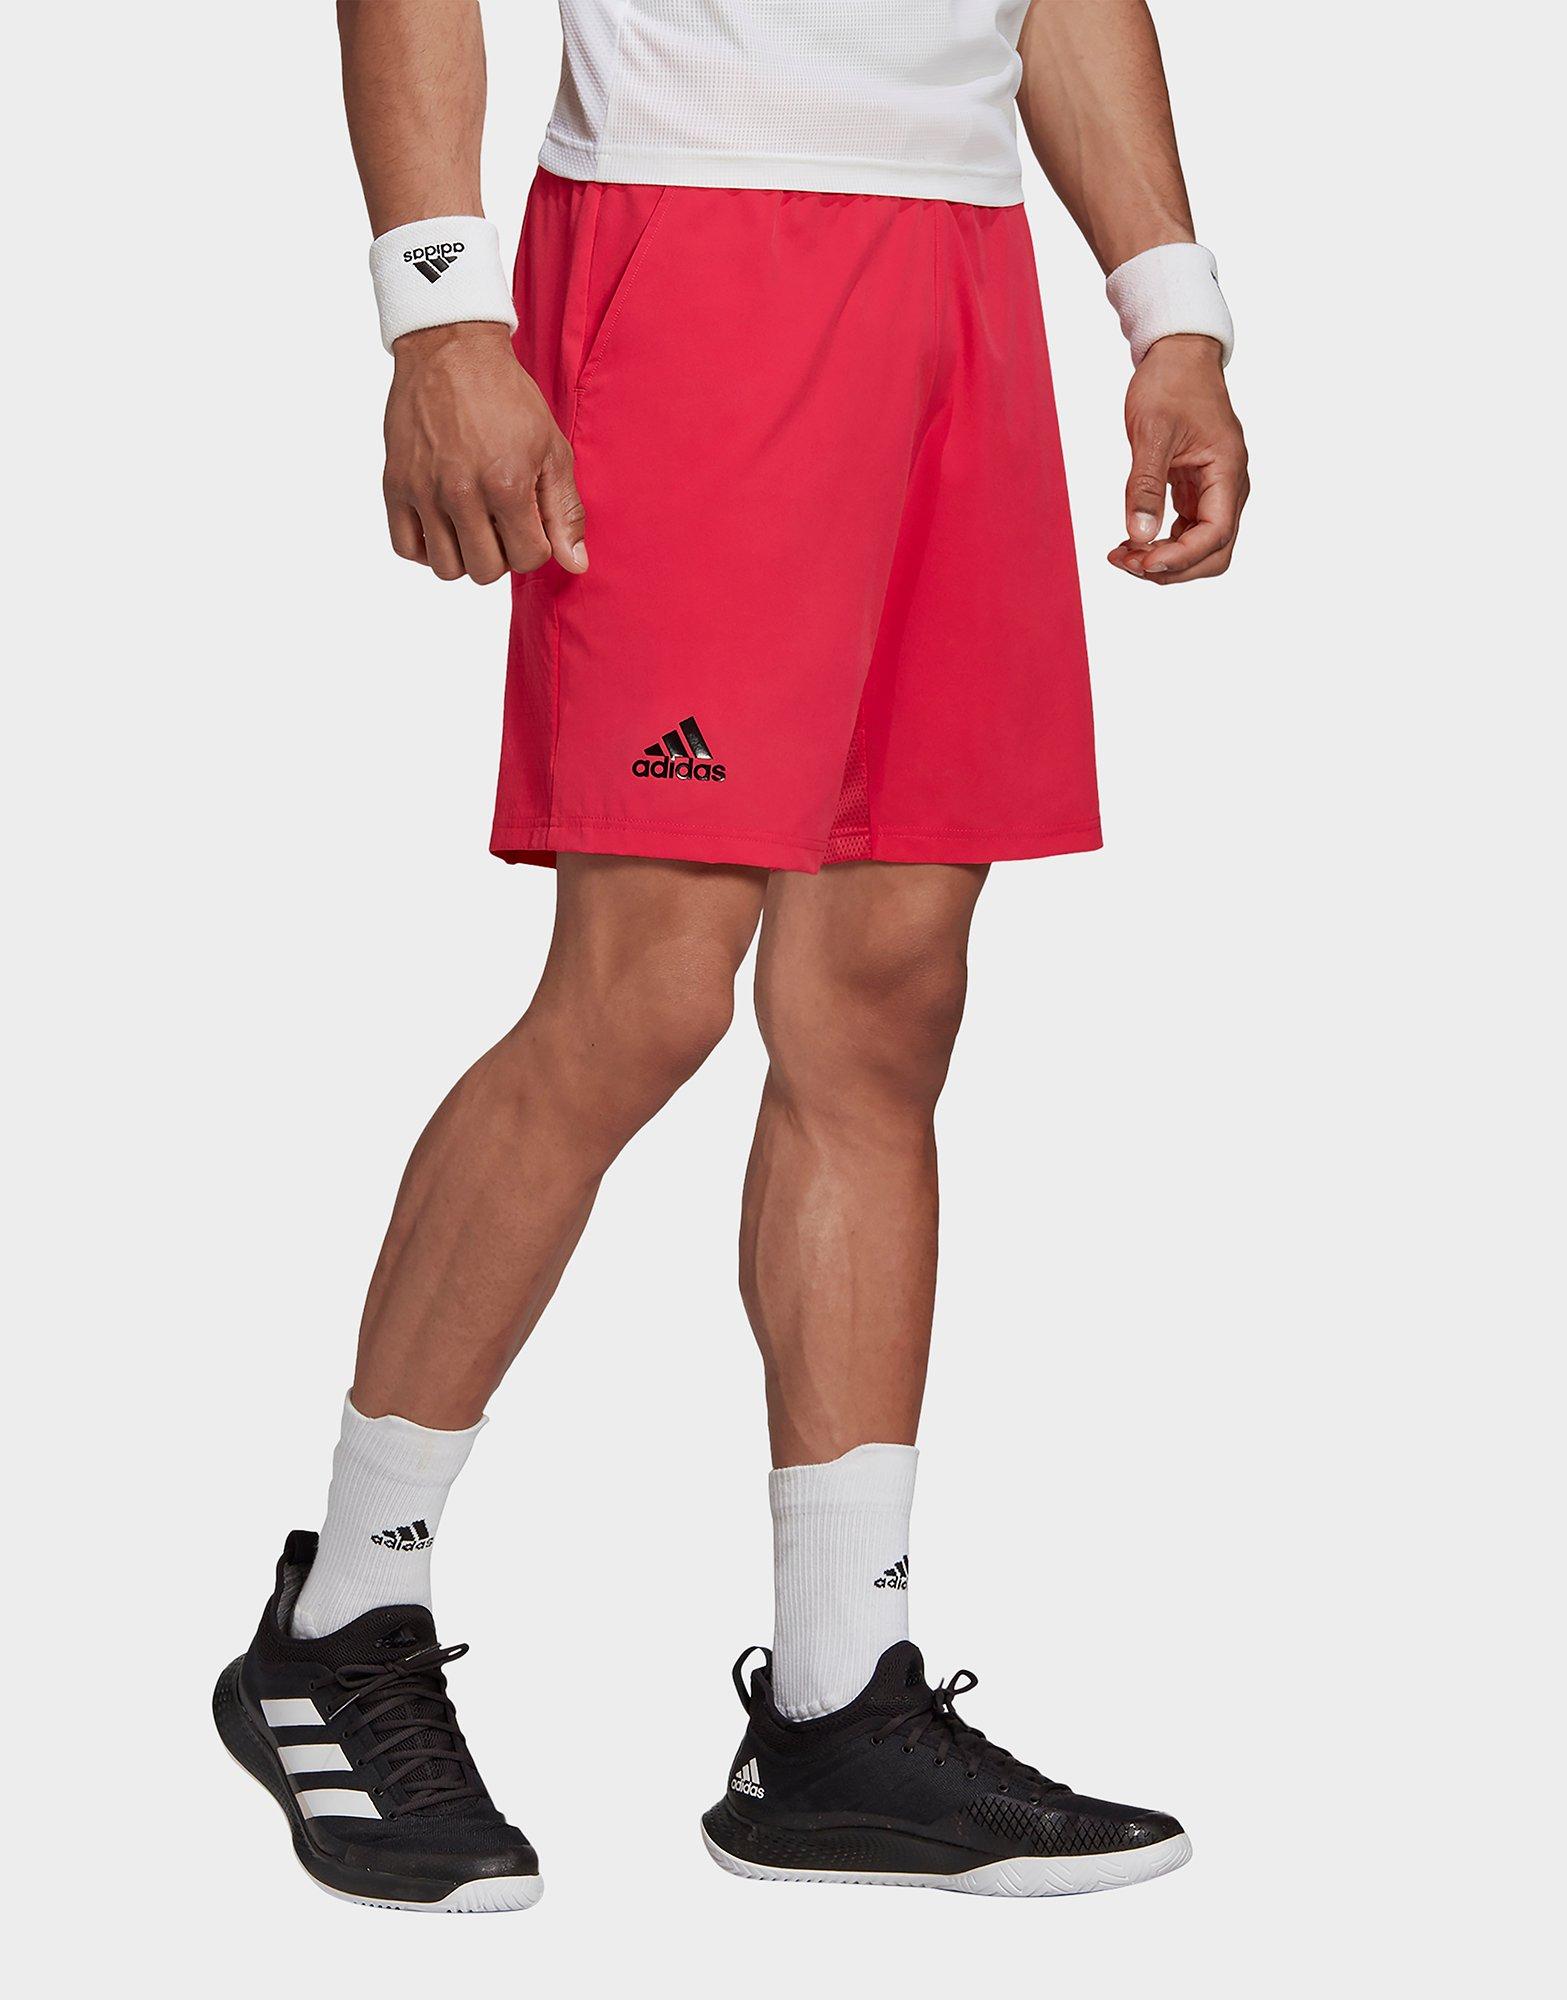 adidas 2 in 1 tennis shorts